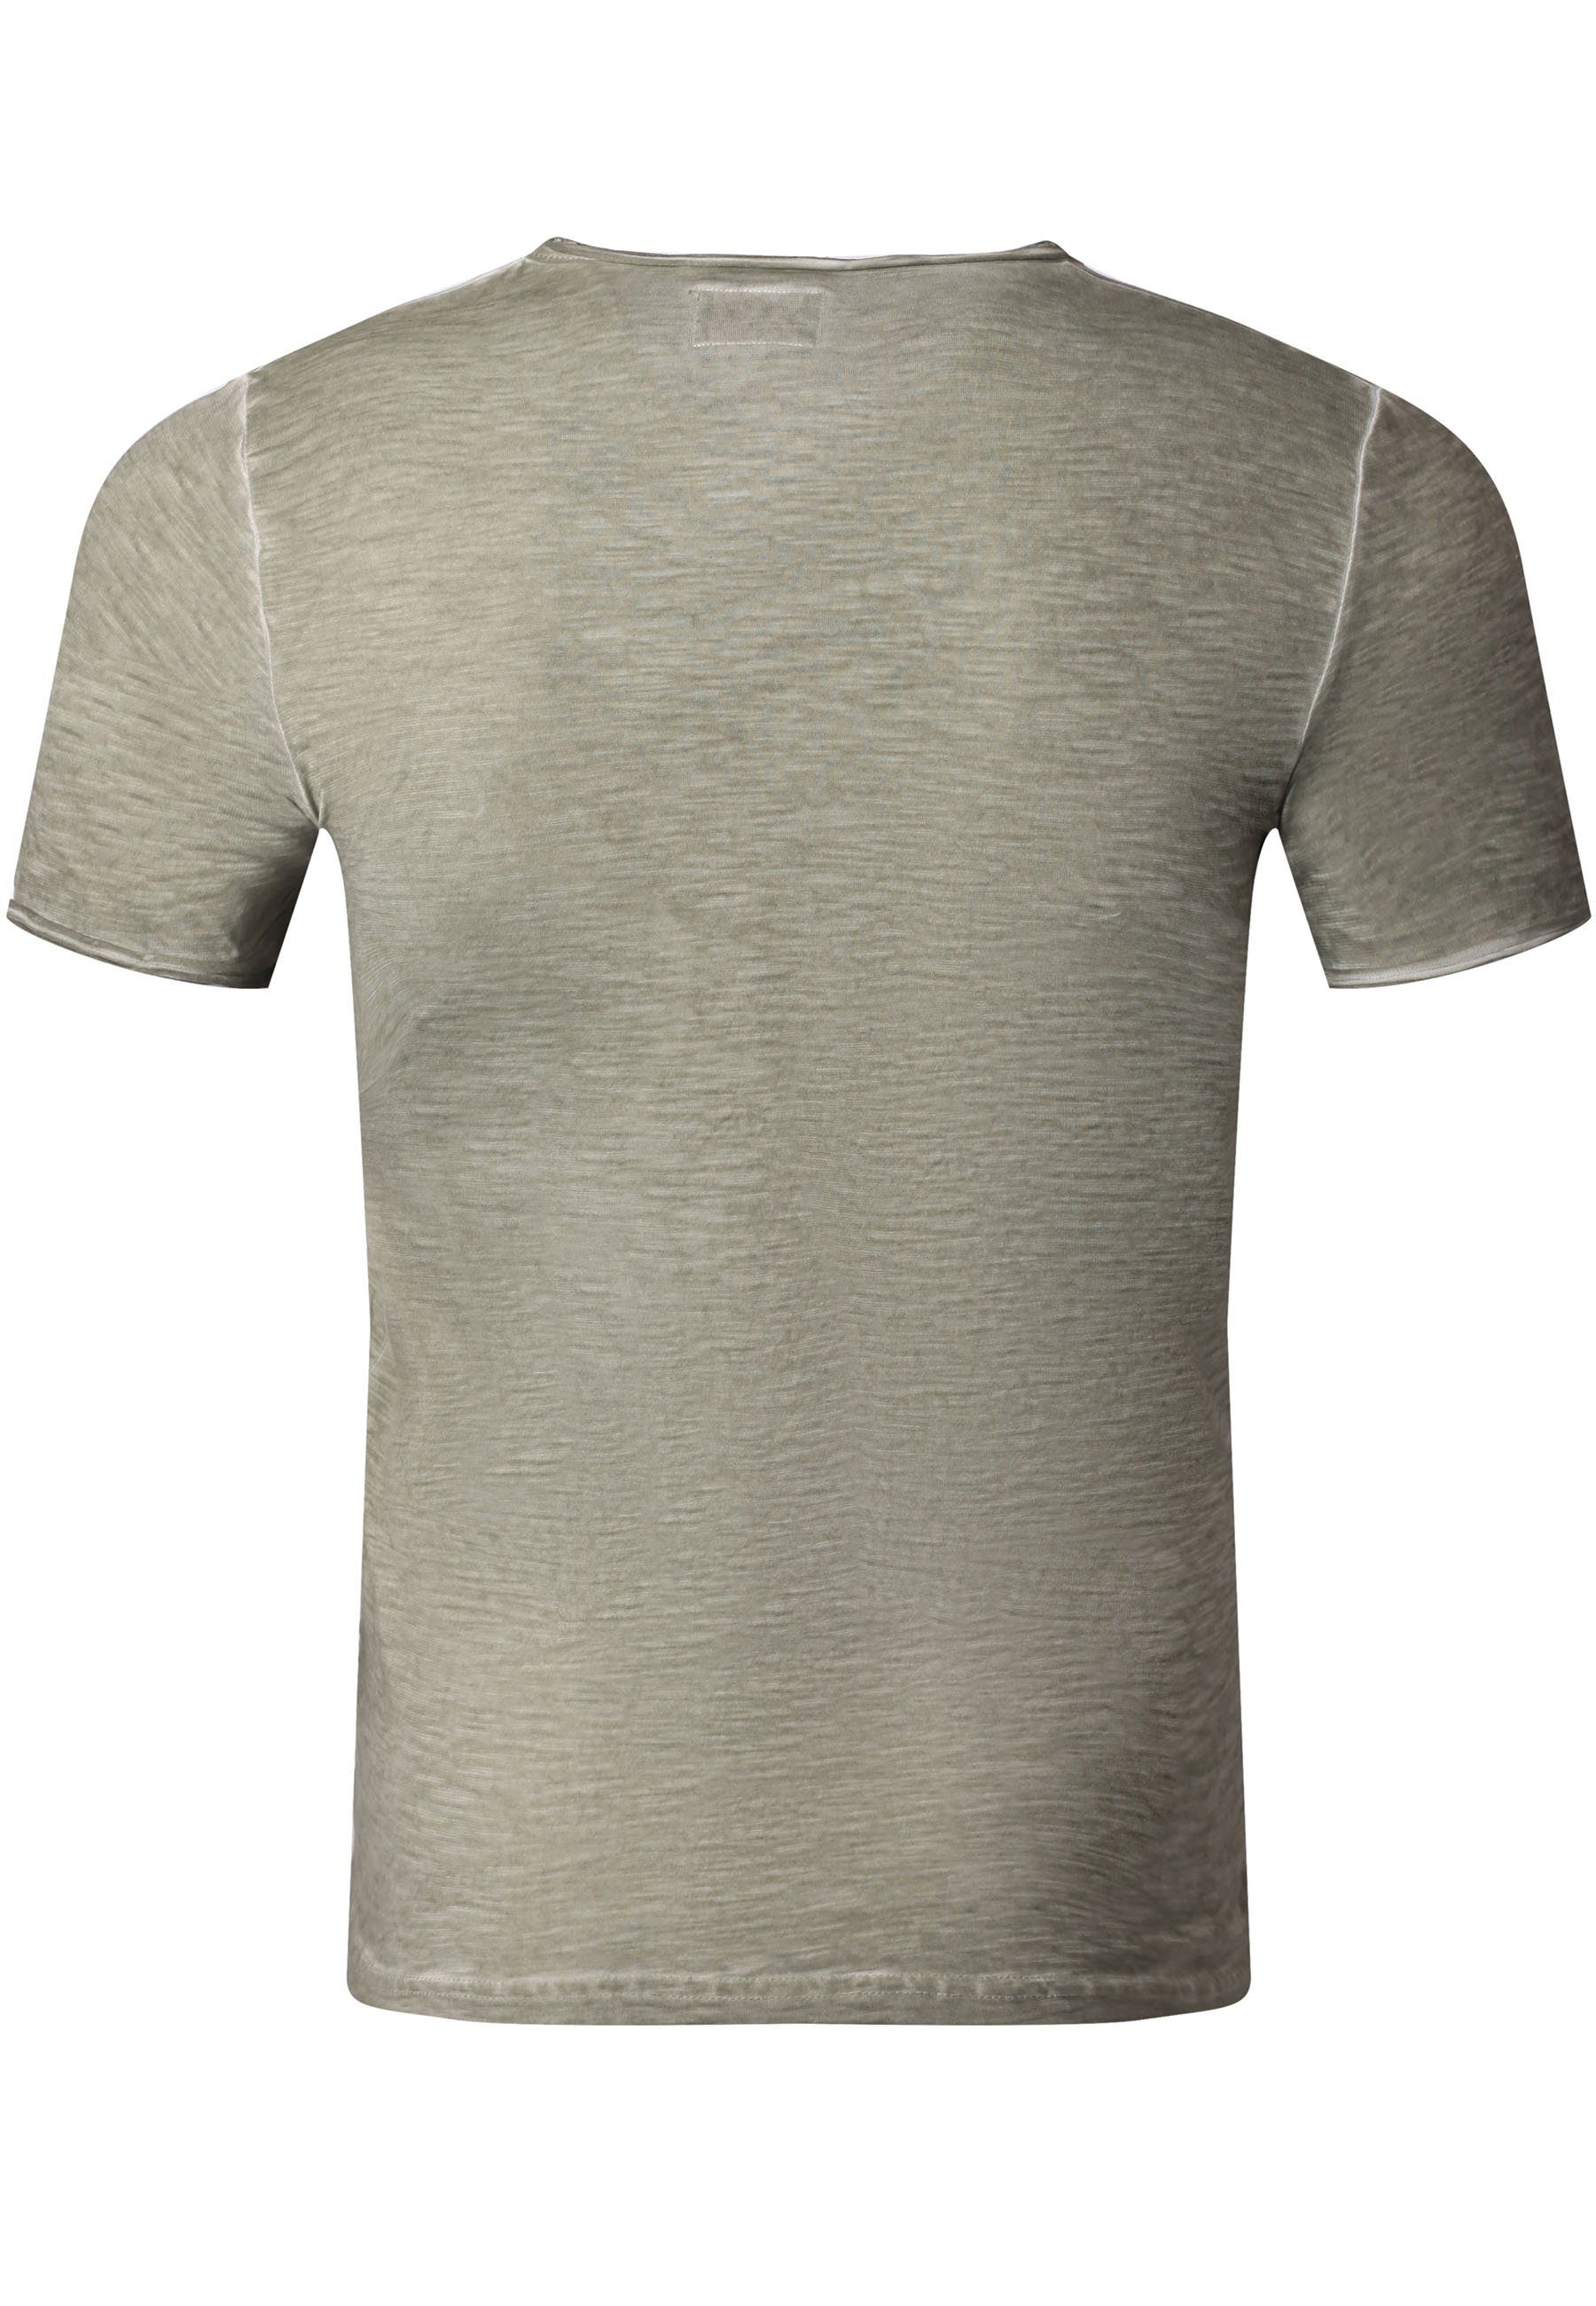 Männer Vintage Style (1-tlg) Optik Reslad Herren V-Neck T-Shirt Shirt verwaschen Reslad khaki V-Ausschnitt T-Shirt Vintage Shirt